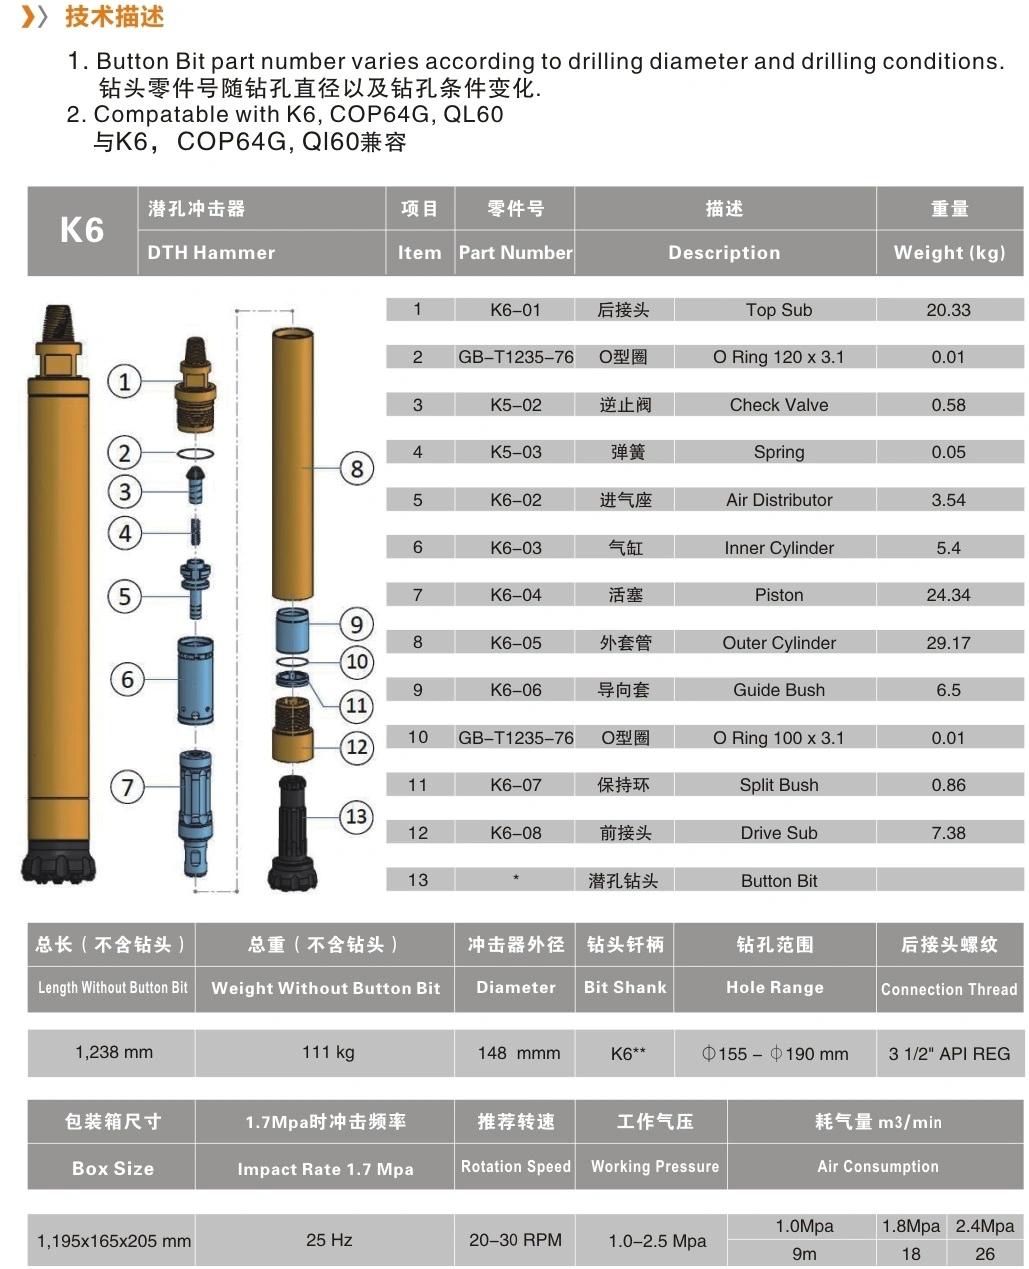 Kaishan SPE K6 155-190mm 6inch High Pressure 10-25Bar DTH Hammer